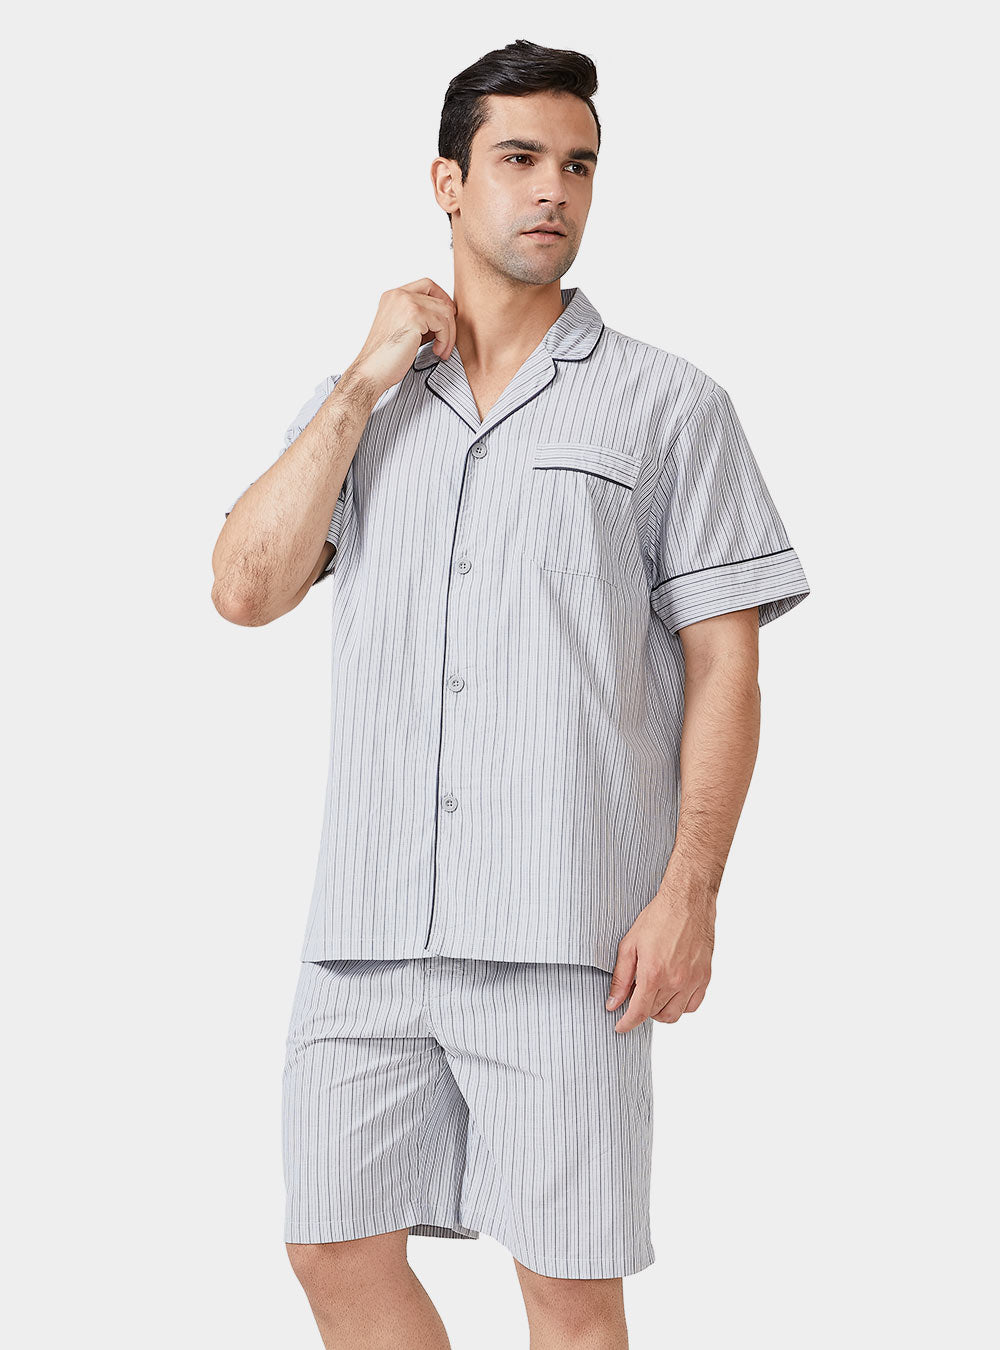 Penn Men's Pajama Shorts Comfy - Soft Lounge Sleep Shorts Separate